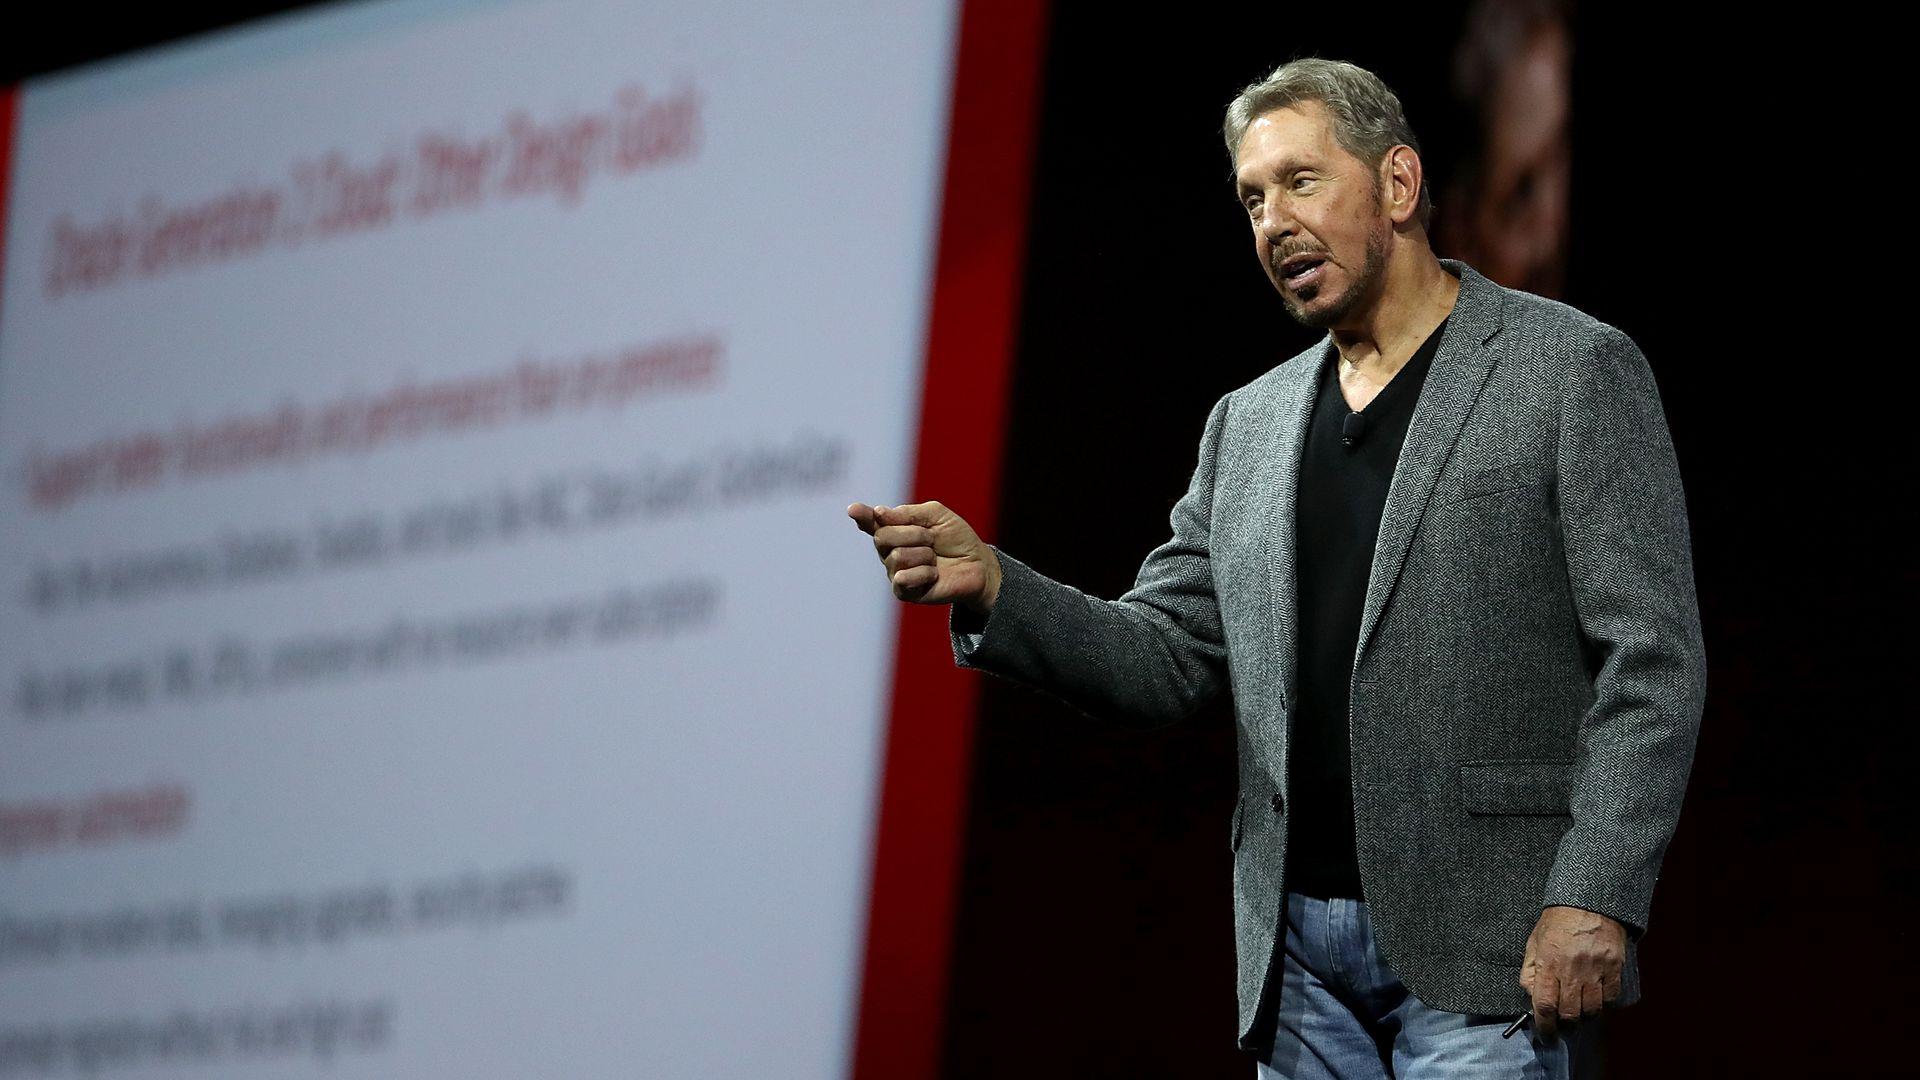 Tesla adds Oracle founder Larry Ellison to board of directors